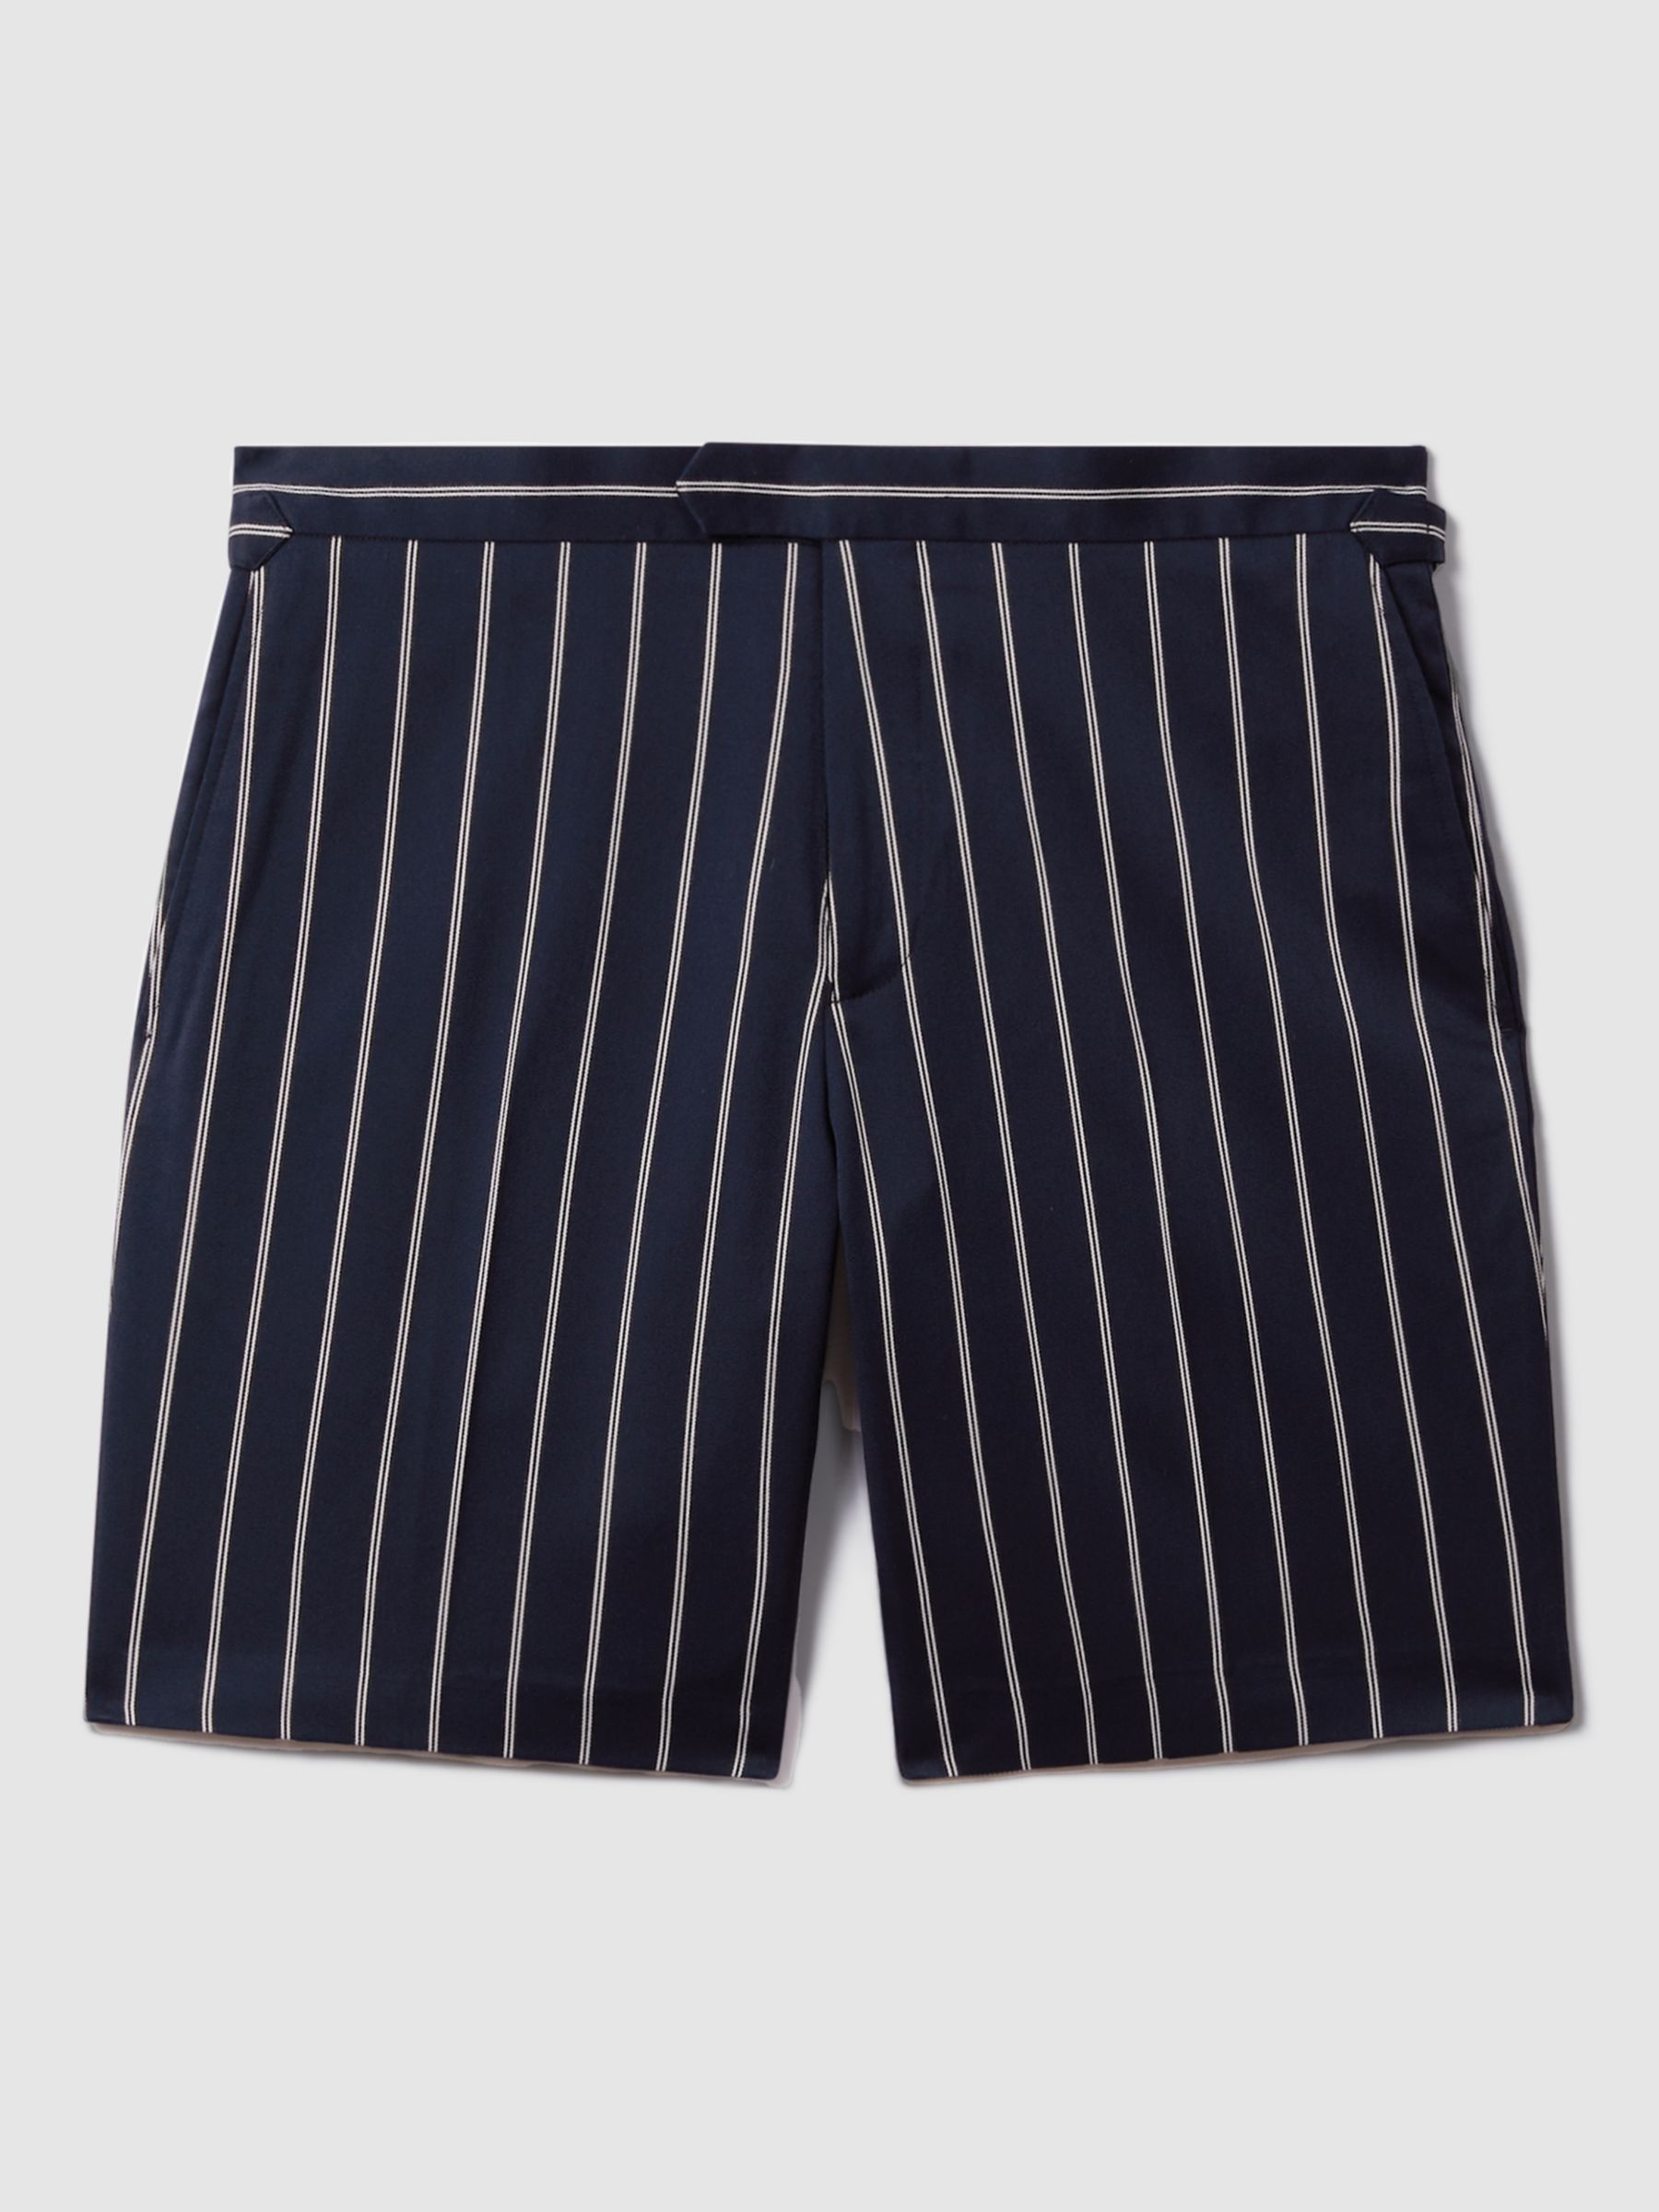 Reiss Lake Fine Stripe Side Adjustable Shorts, Navy/White, 28R